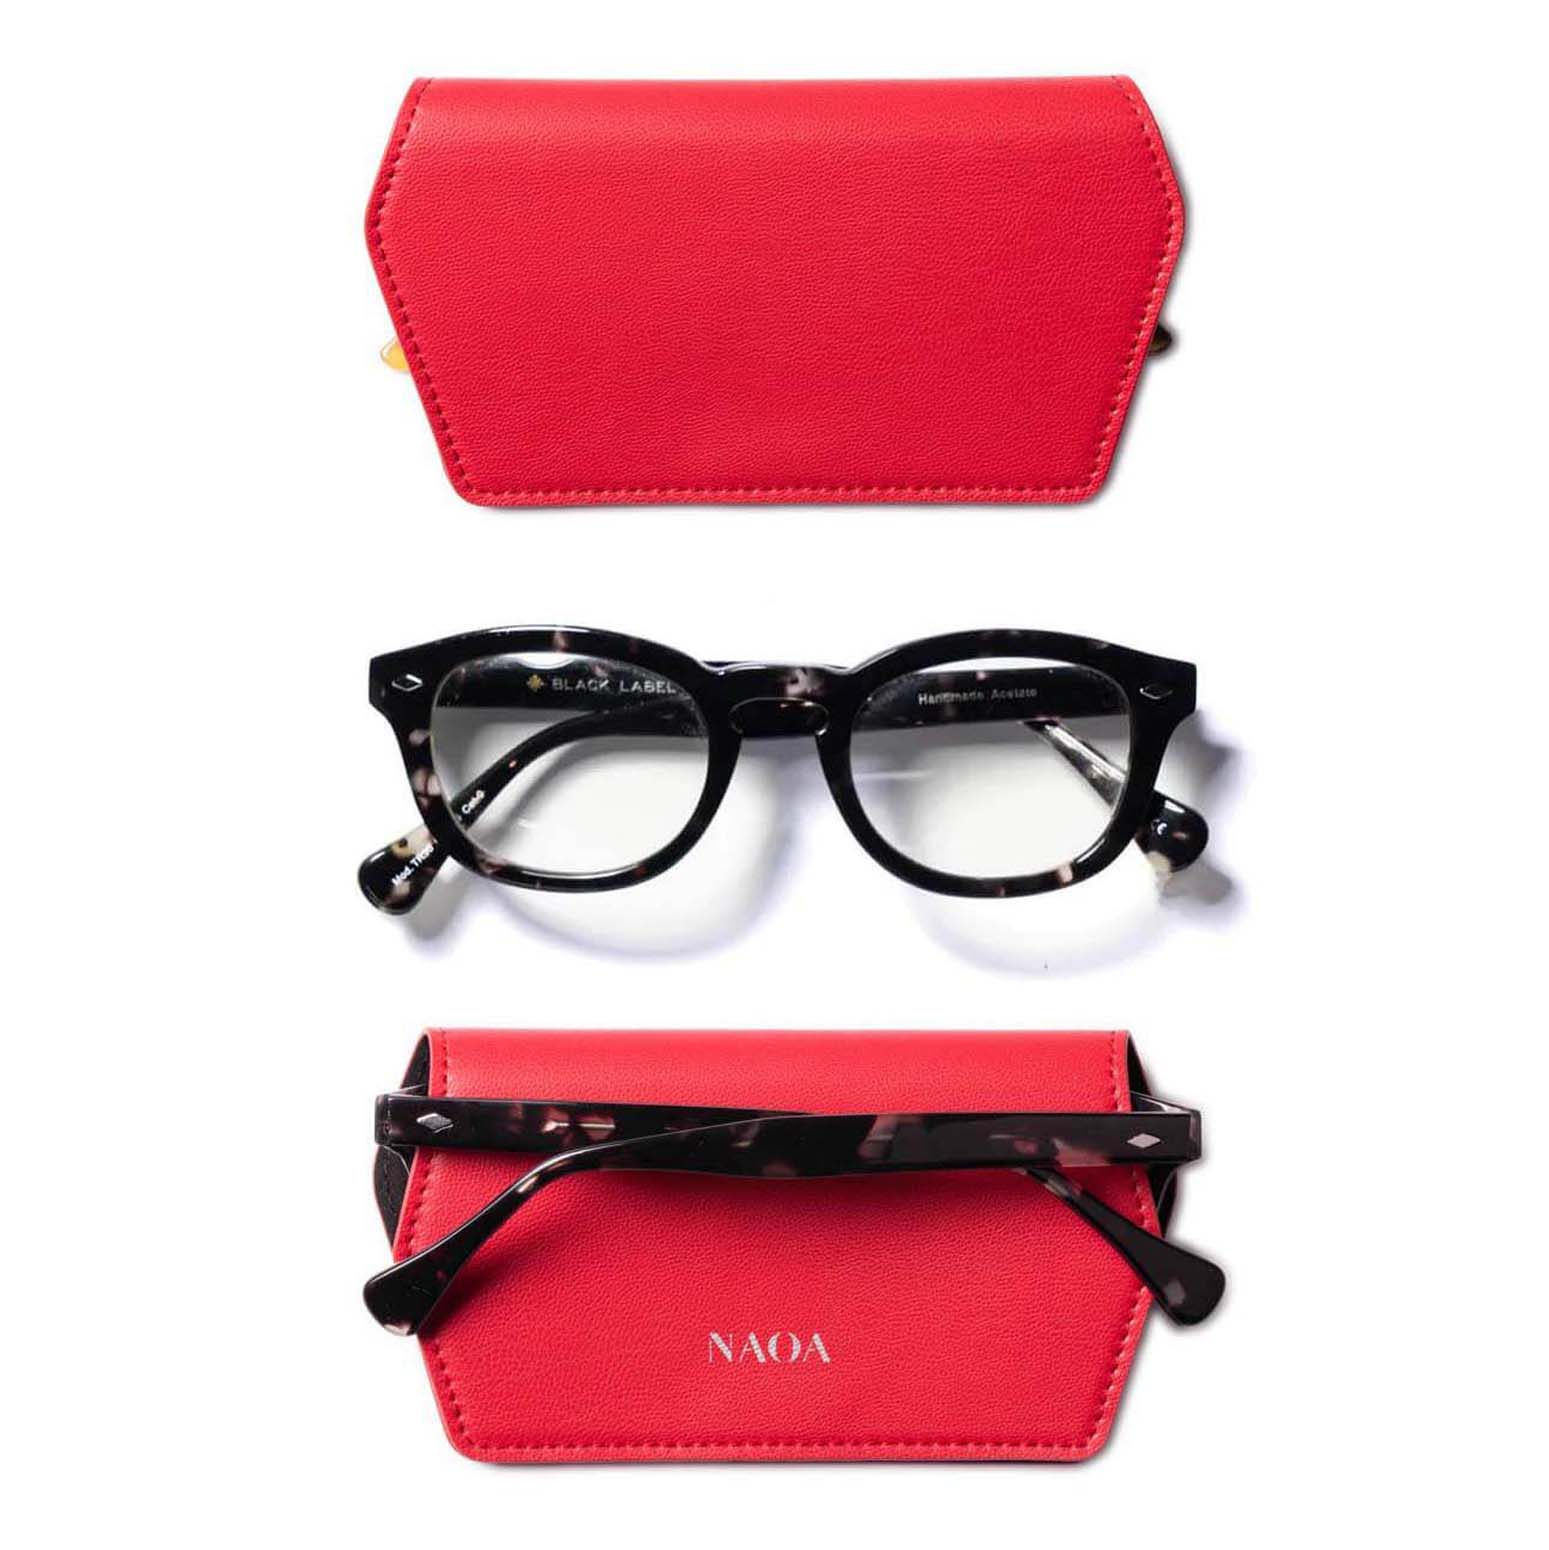 slim glasses case